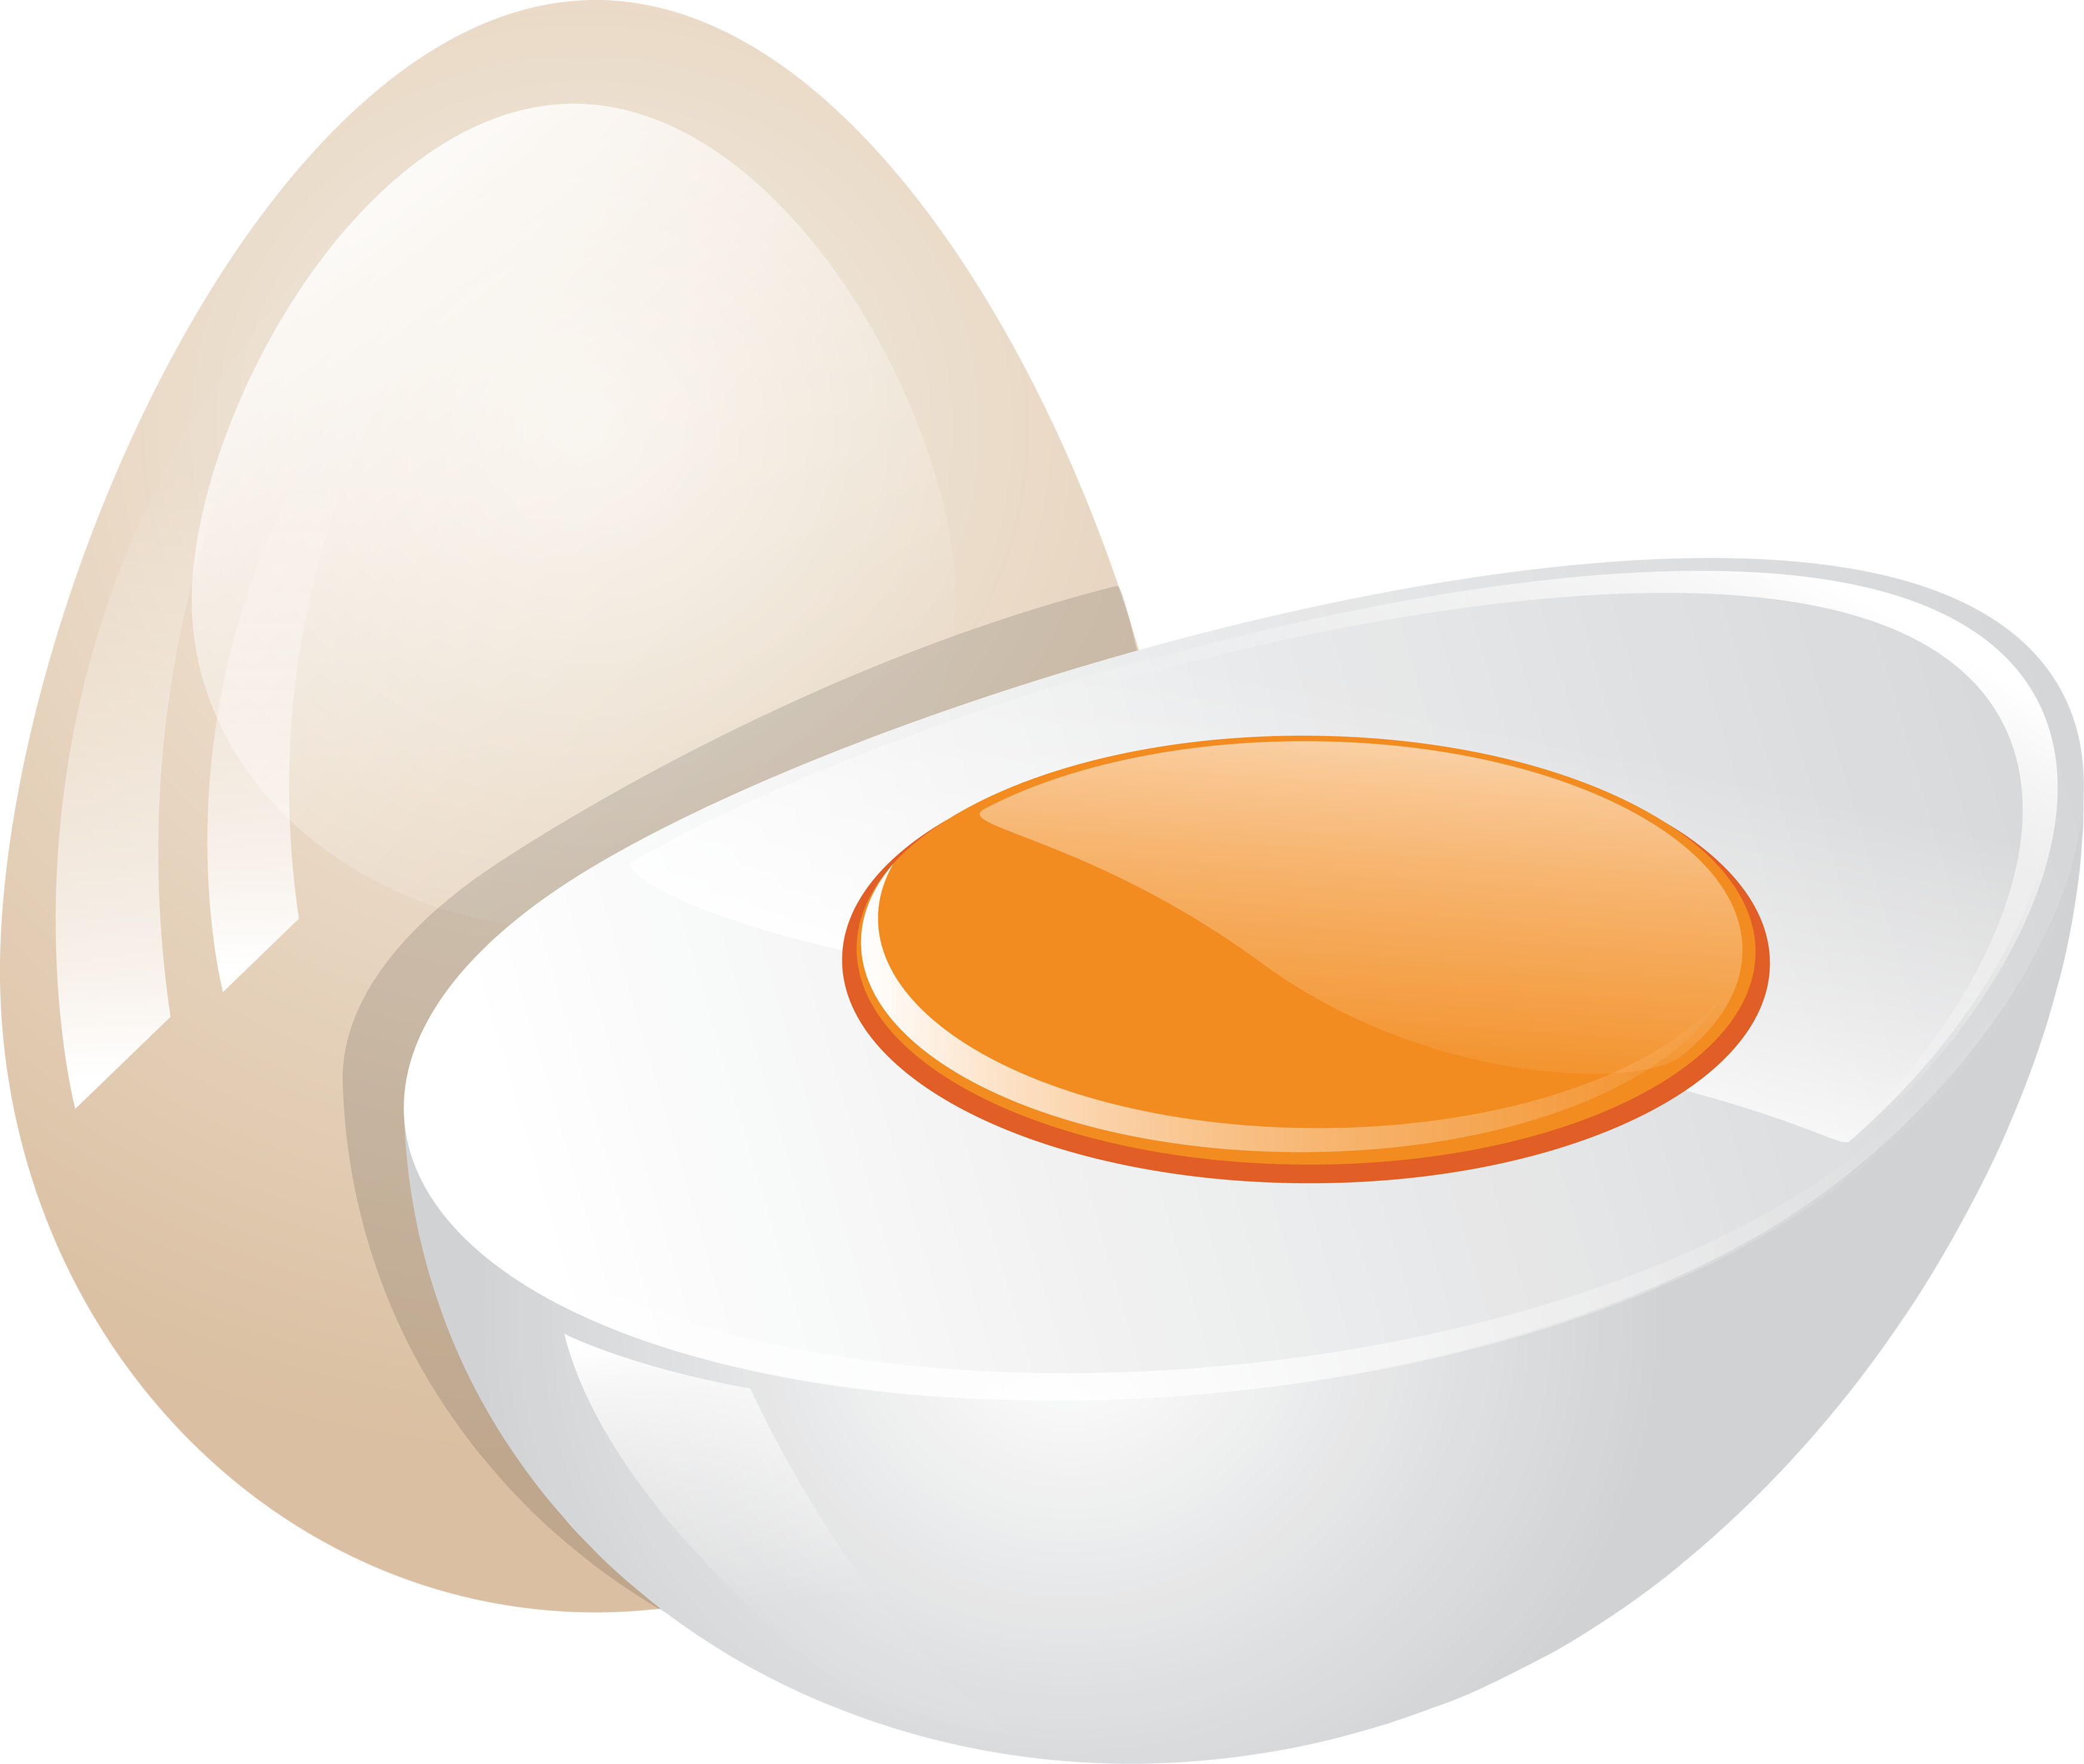 Egg Png Image - Fried Egg, Transparent background PNG HD thumbnail